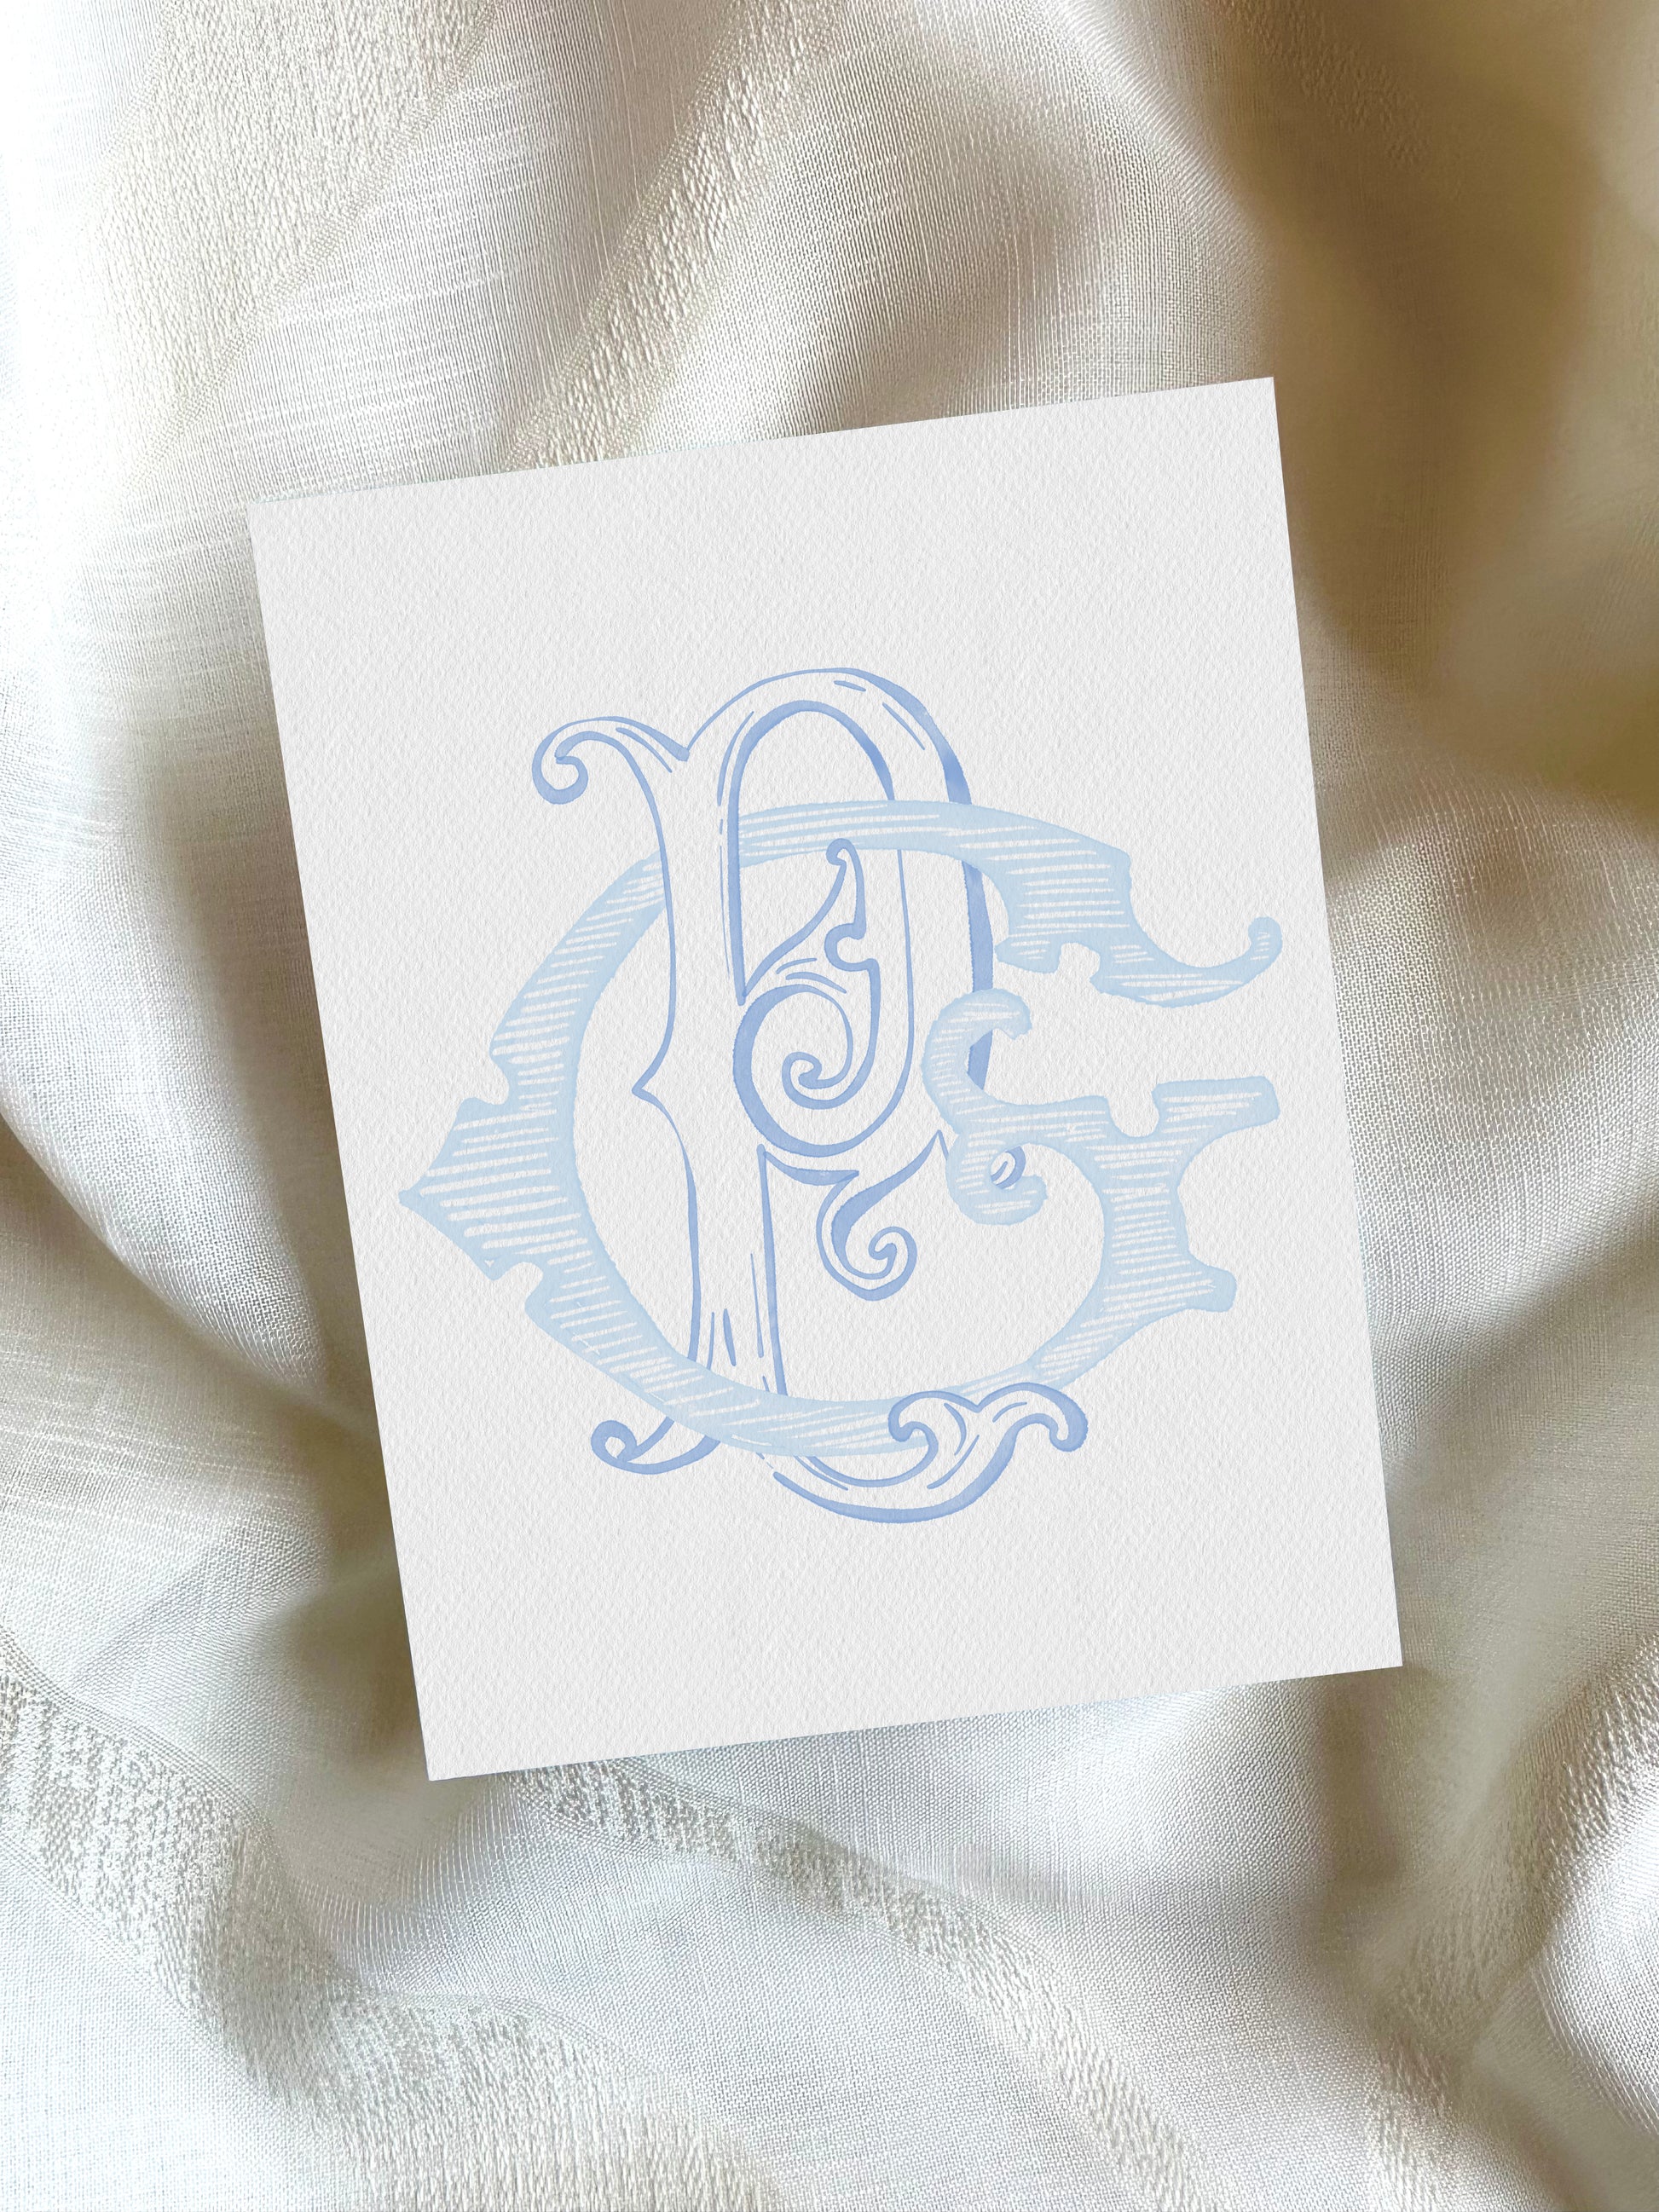 2 Letter Monogram with Letters GP PG | Digital Download - Wedding Monogram SVG, Personal Logo, Wedding Logo for Wedding Invitations The Wedding Crest Lab